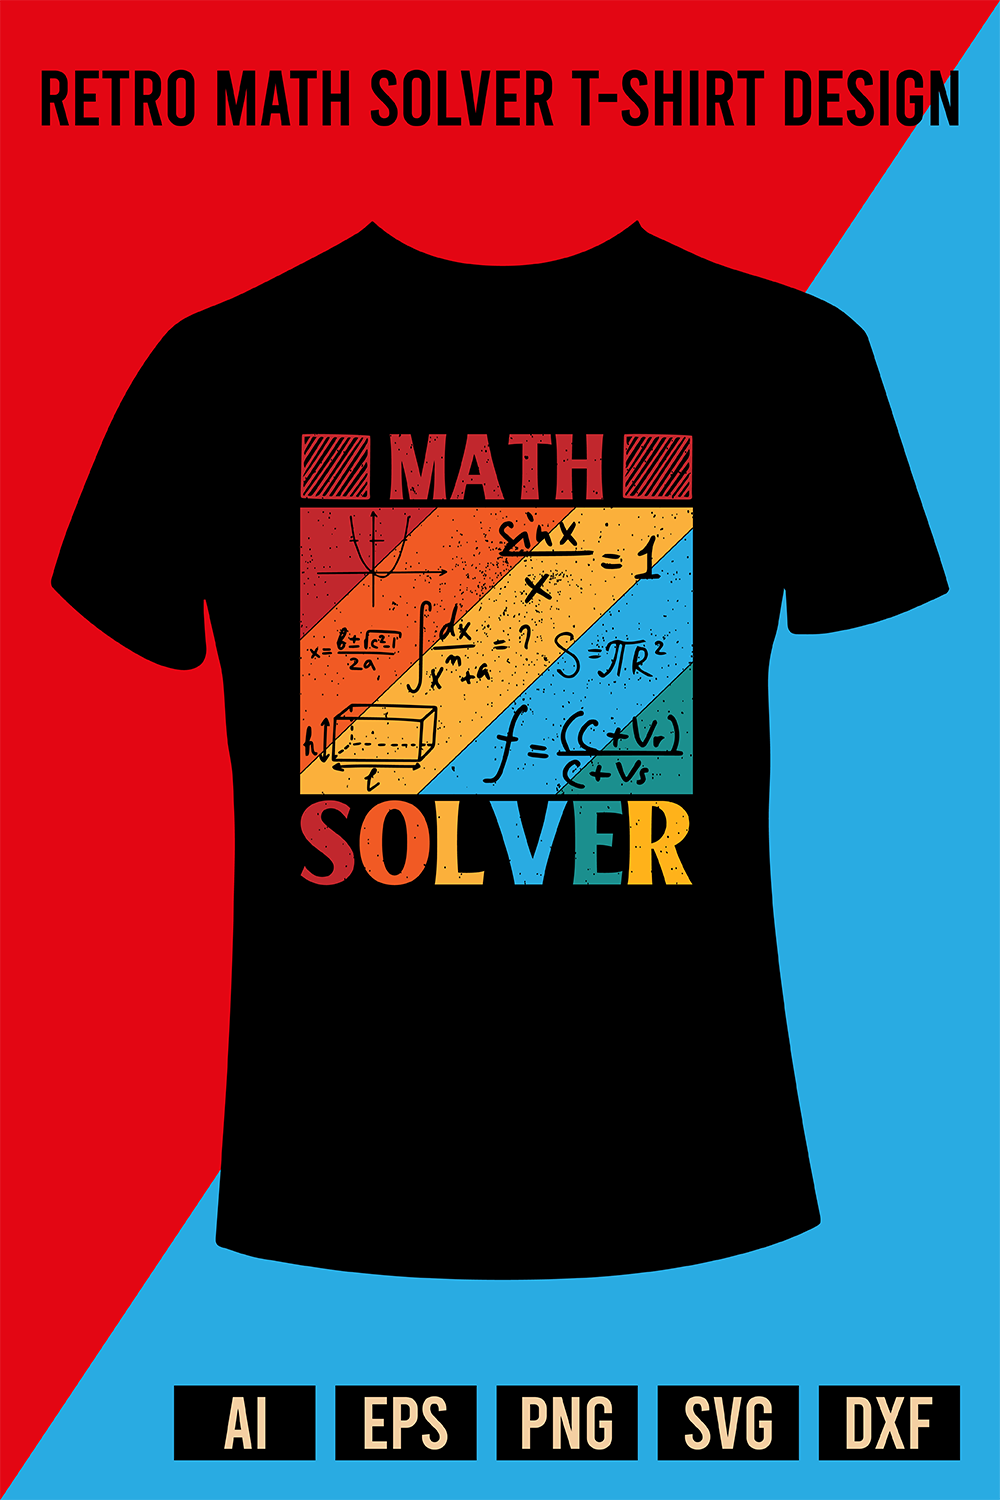 T-Shirt Math Solver Design pinterest image.